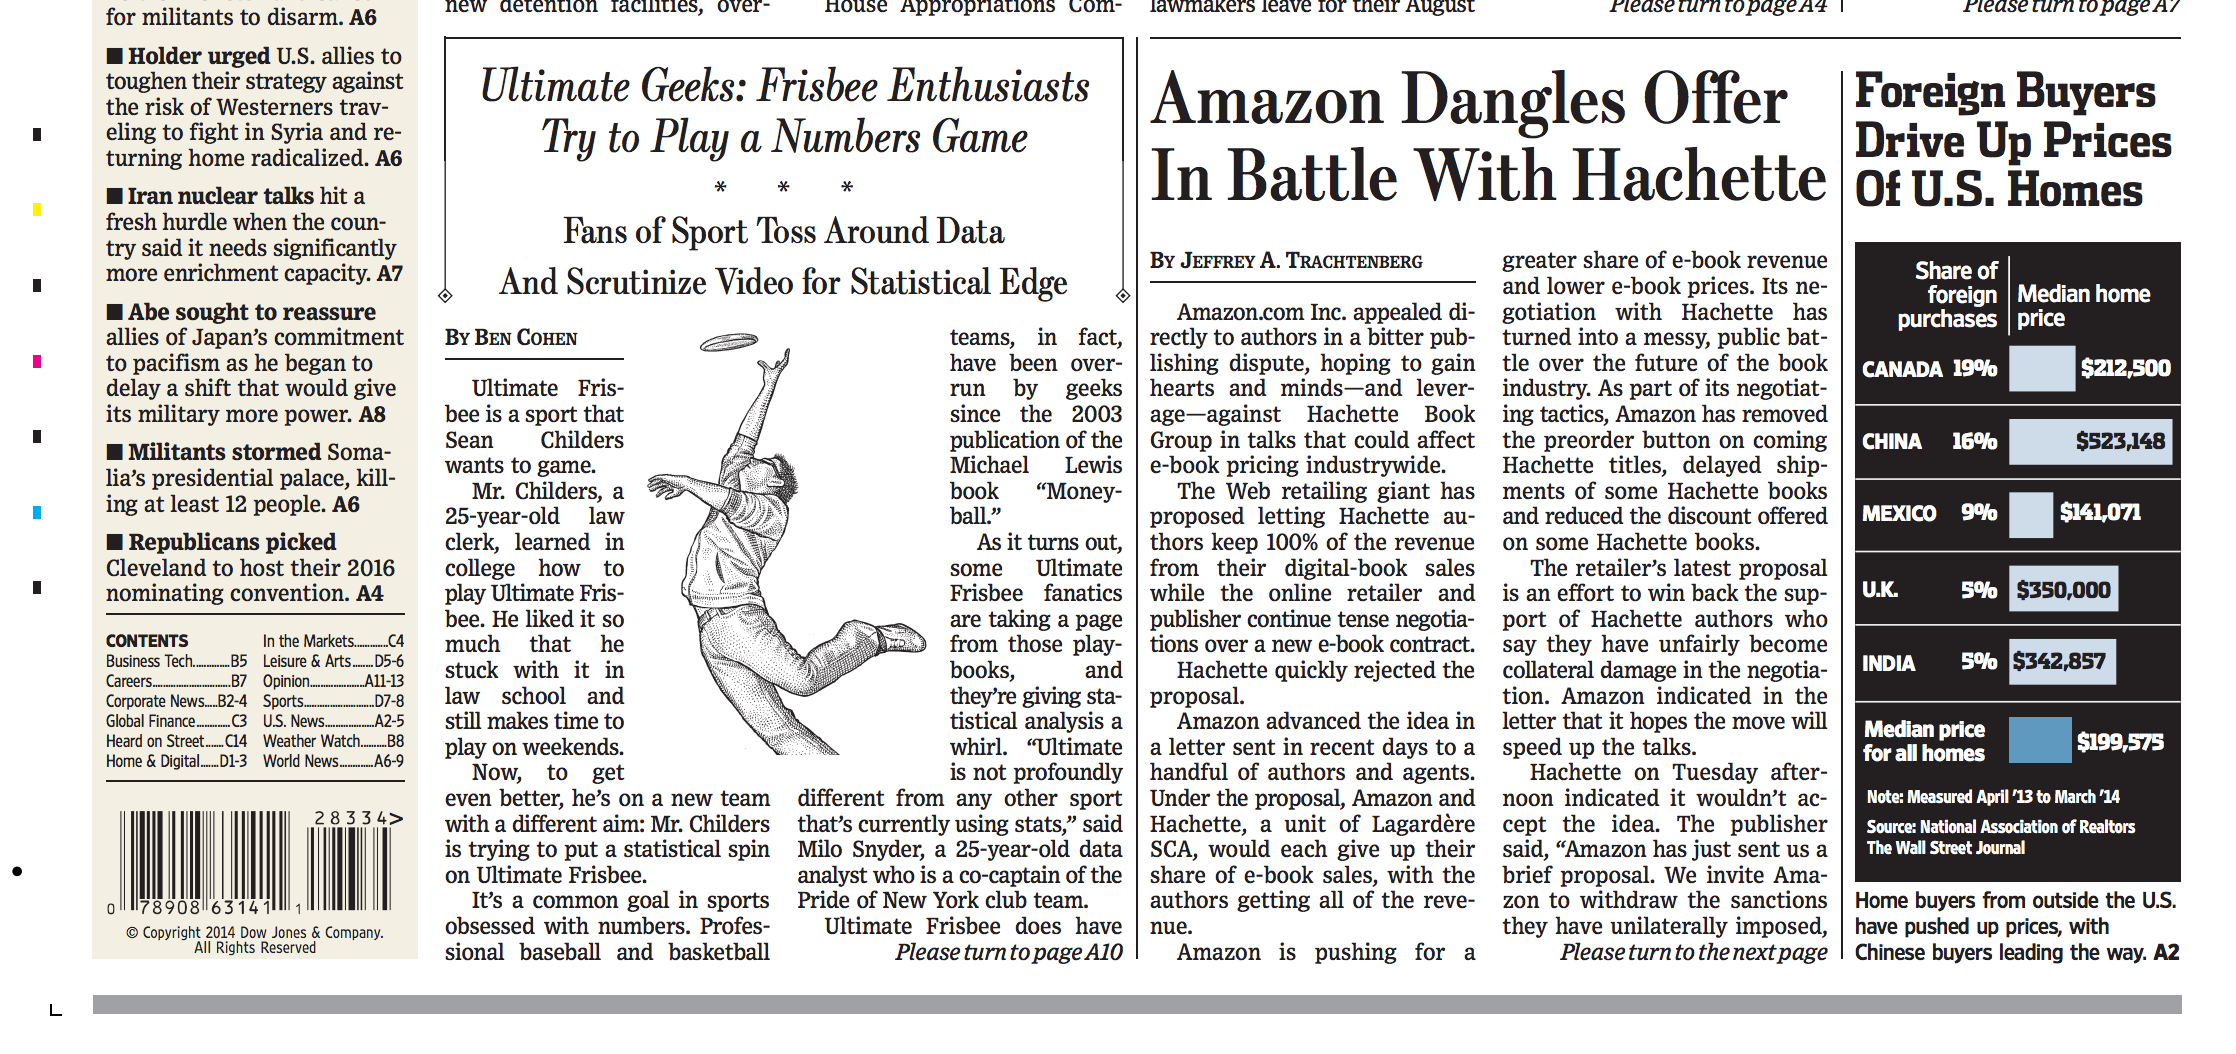 July 9, 2014 Wall Street Journal homepage.